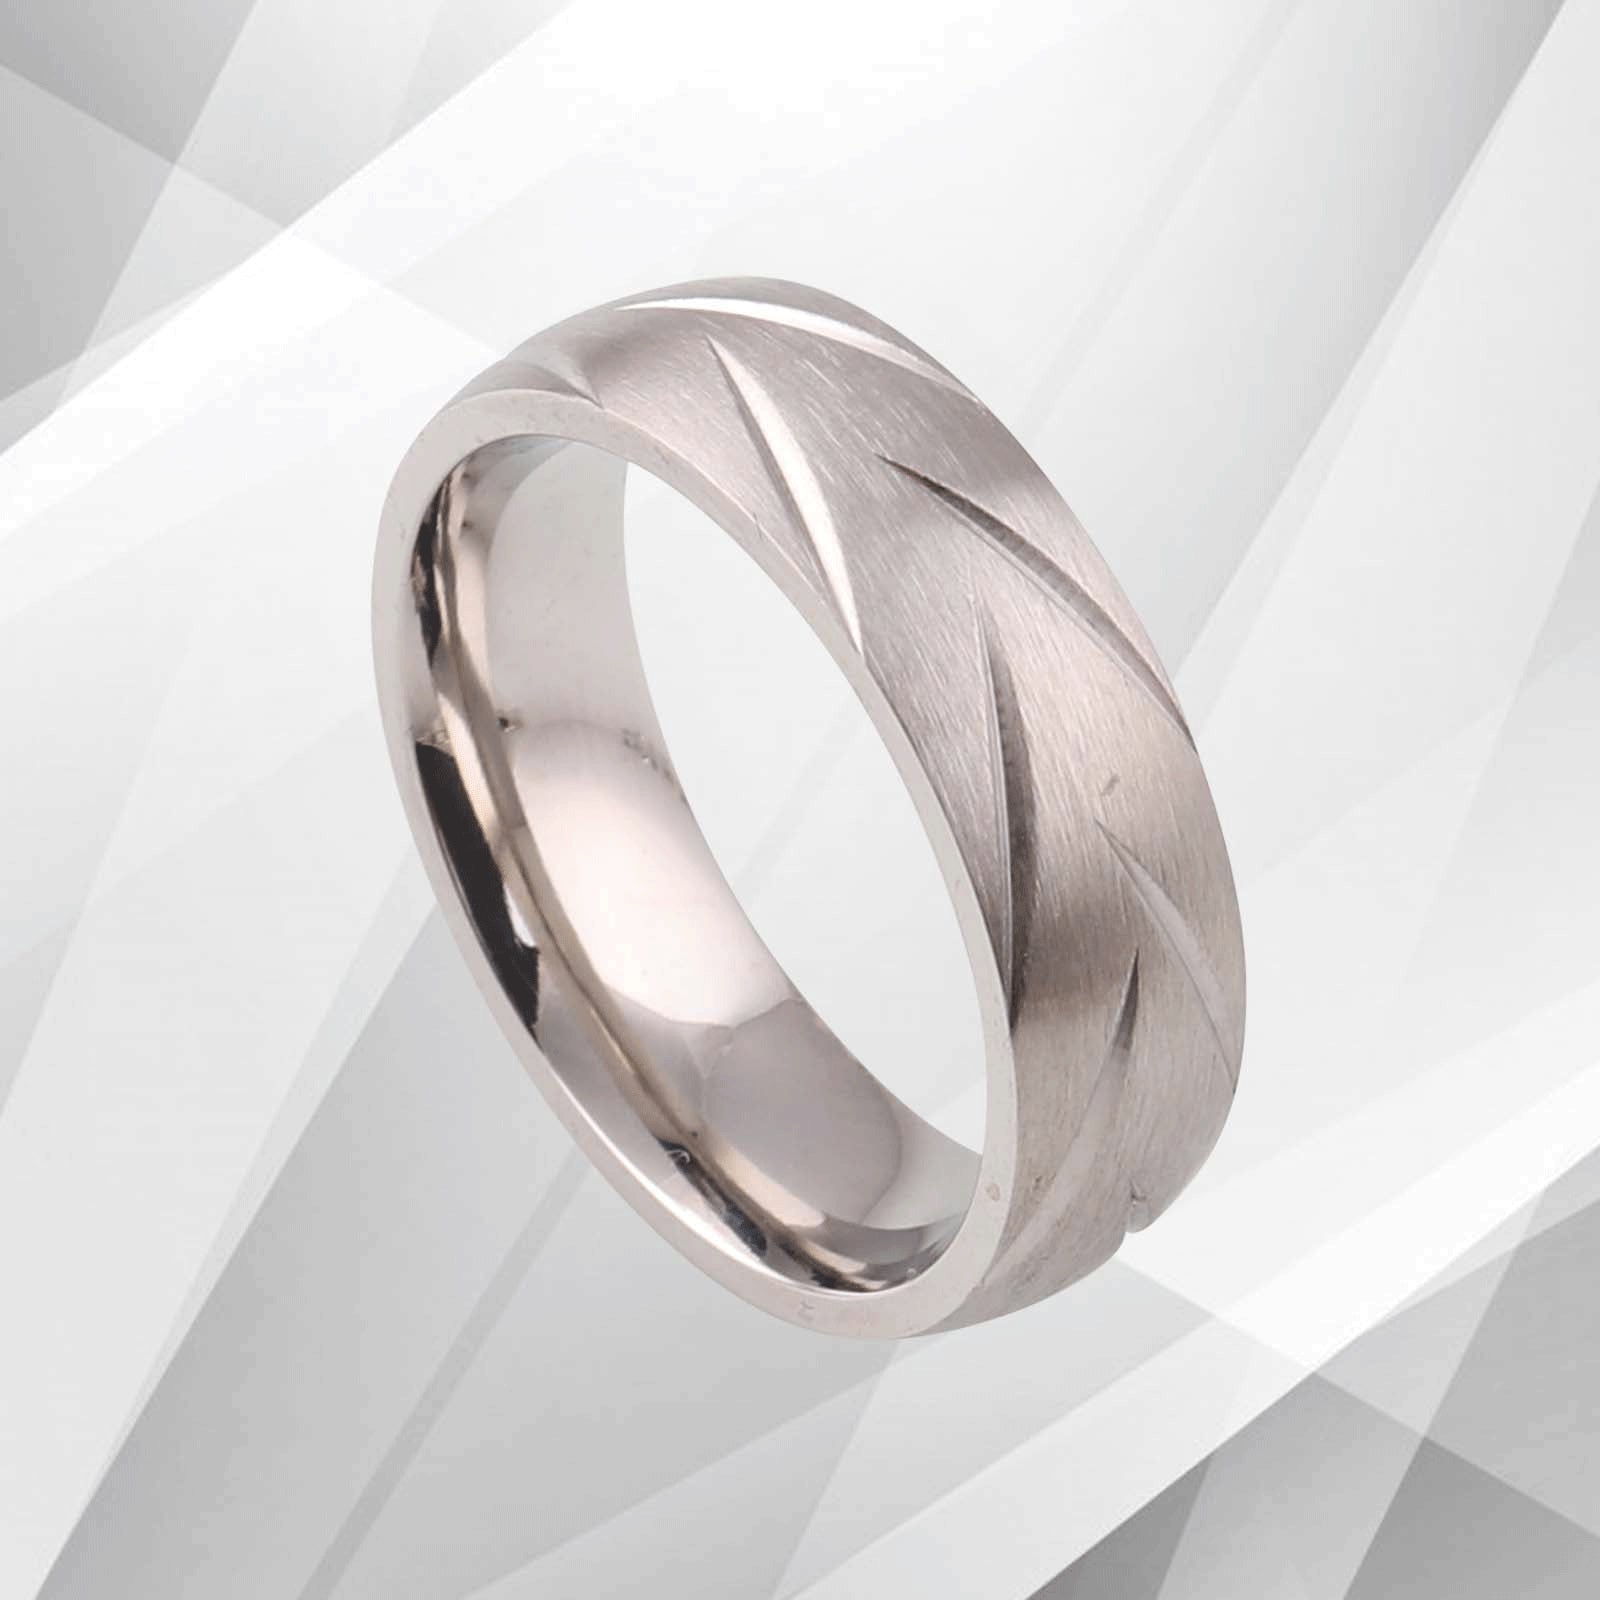 6mm Tungsten Carbide & White Gold Wedding Band Ring - Comfort Fit, Handmade, Men's Engagement Anniversary Gift (NDG10T) Bijou Her